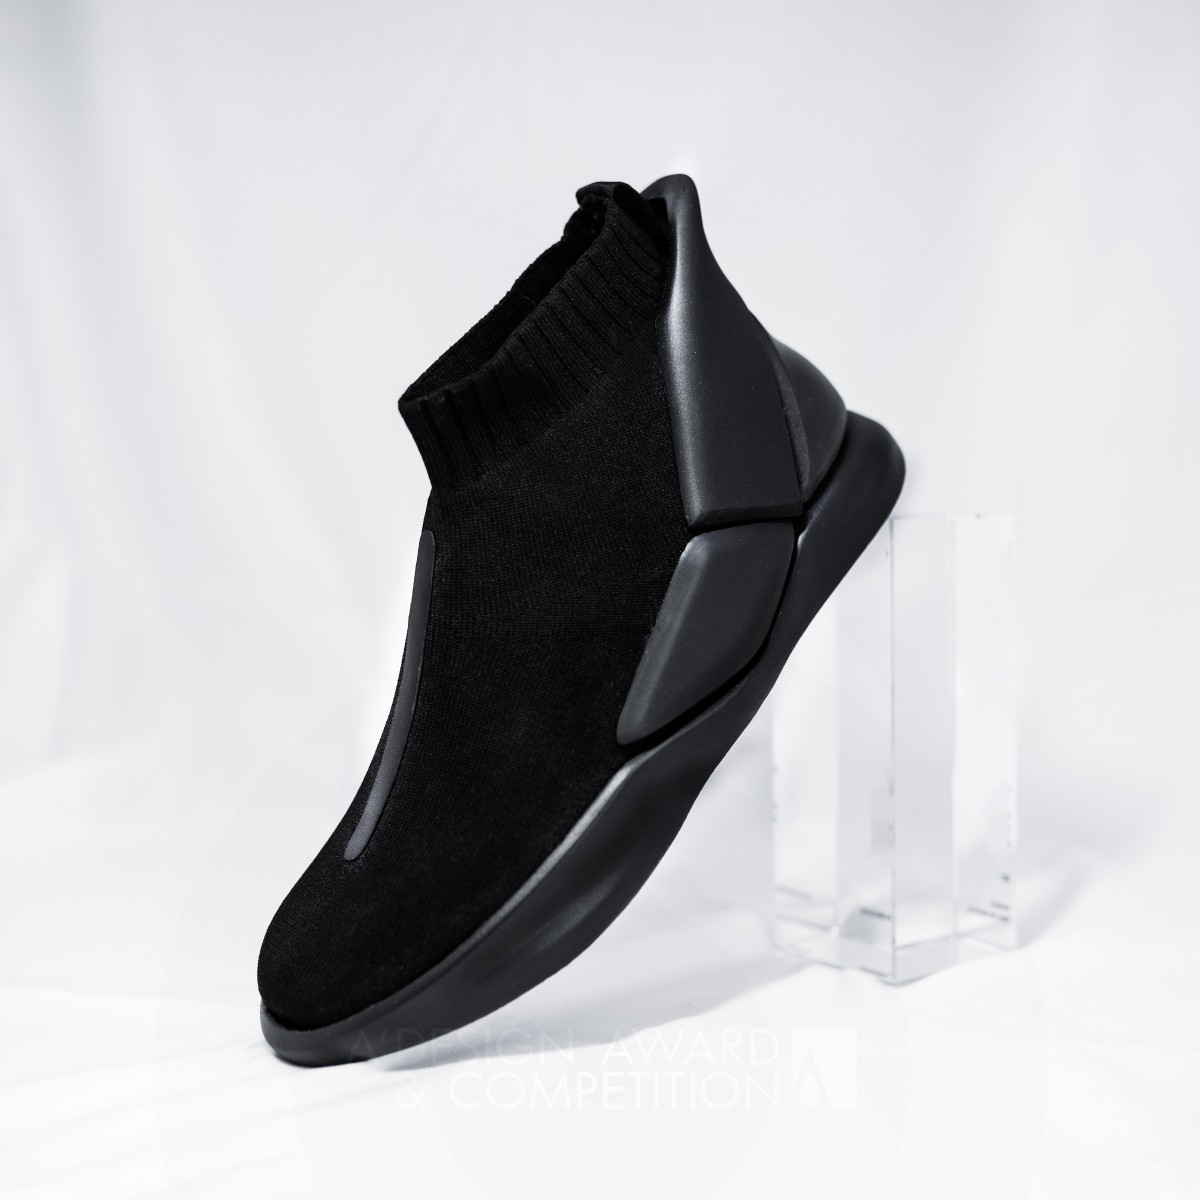 Adamas: The Future of Urban Footwear